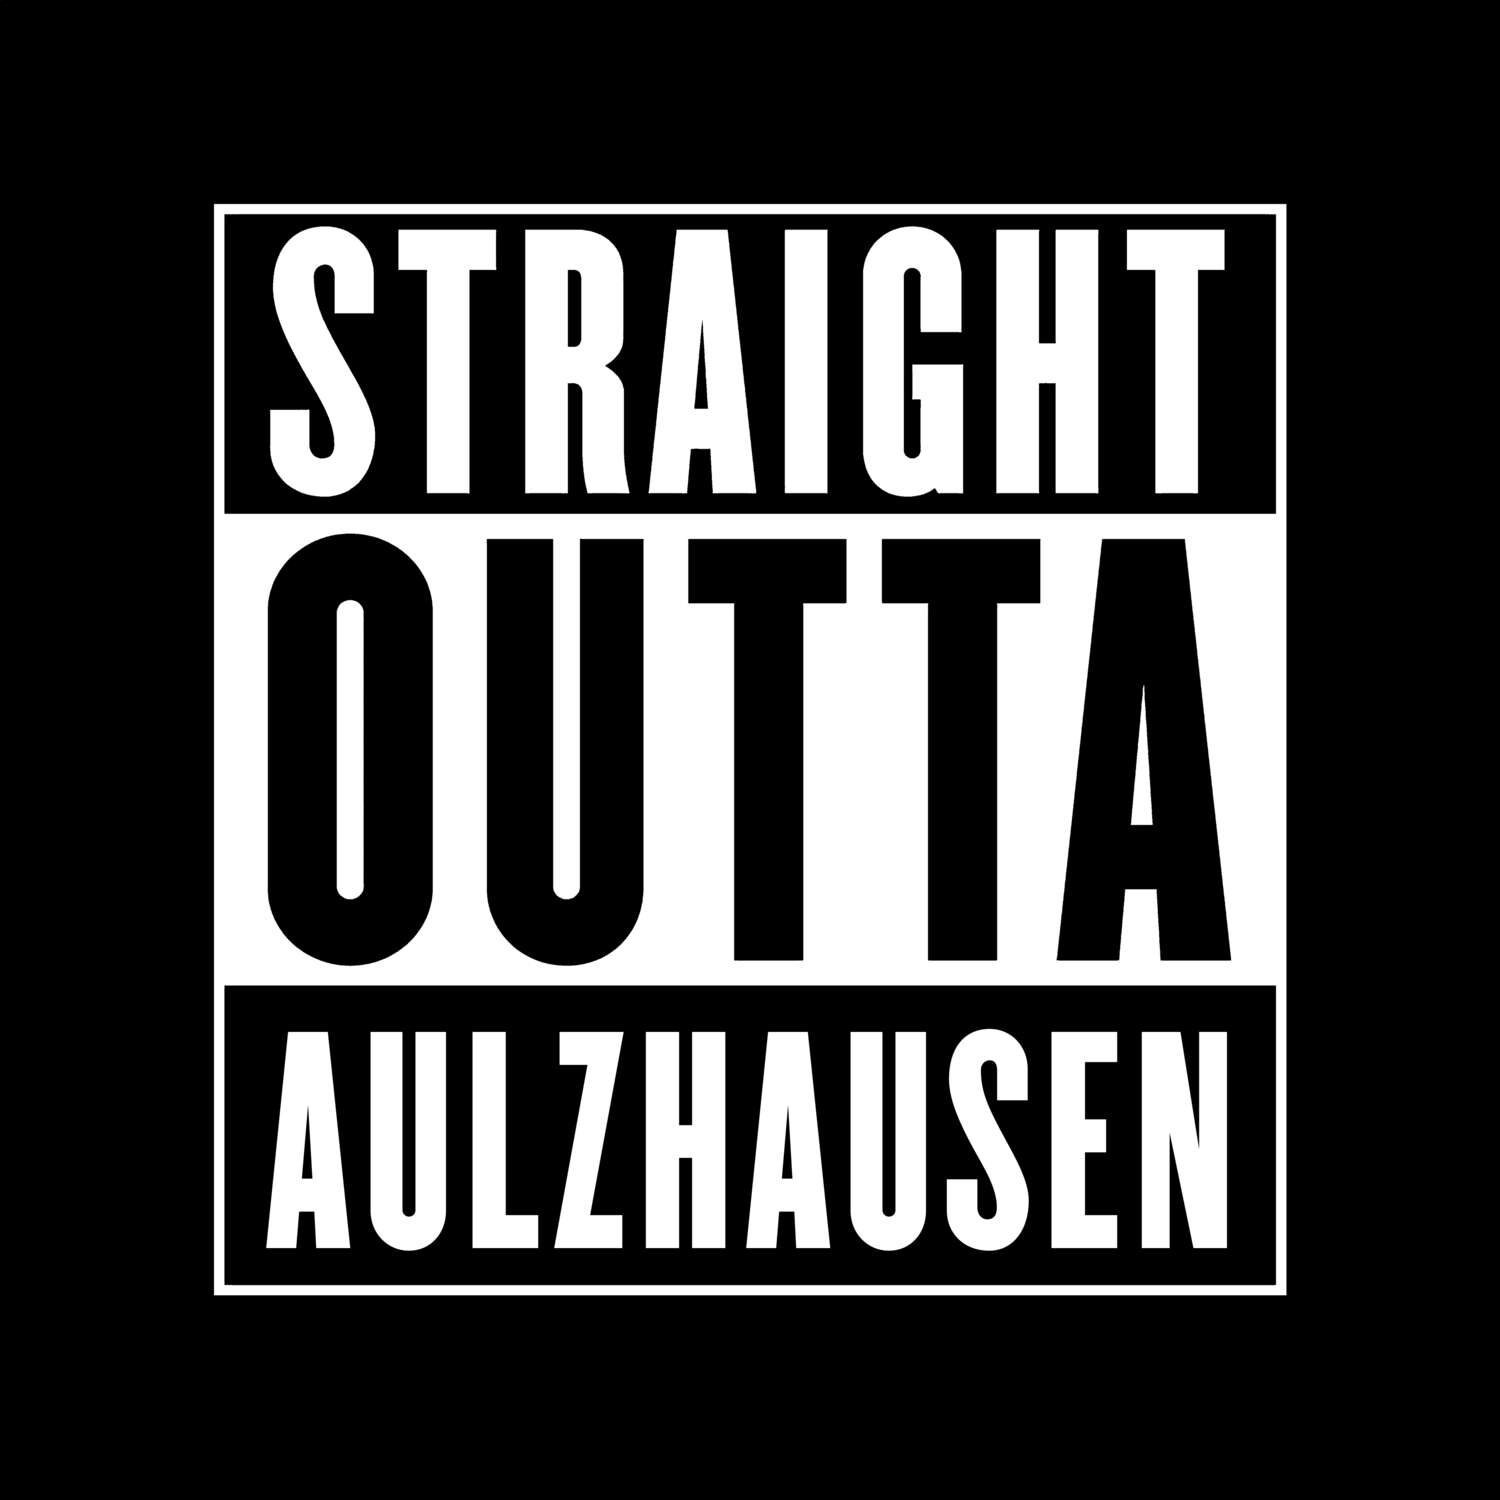 Aulzhausen T-Shirt »Straight Outta«